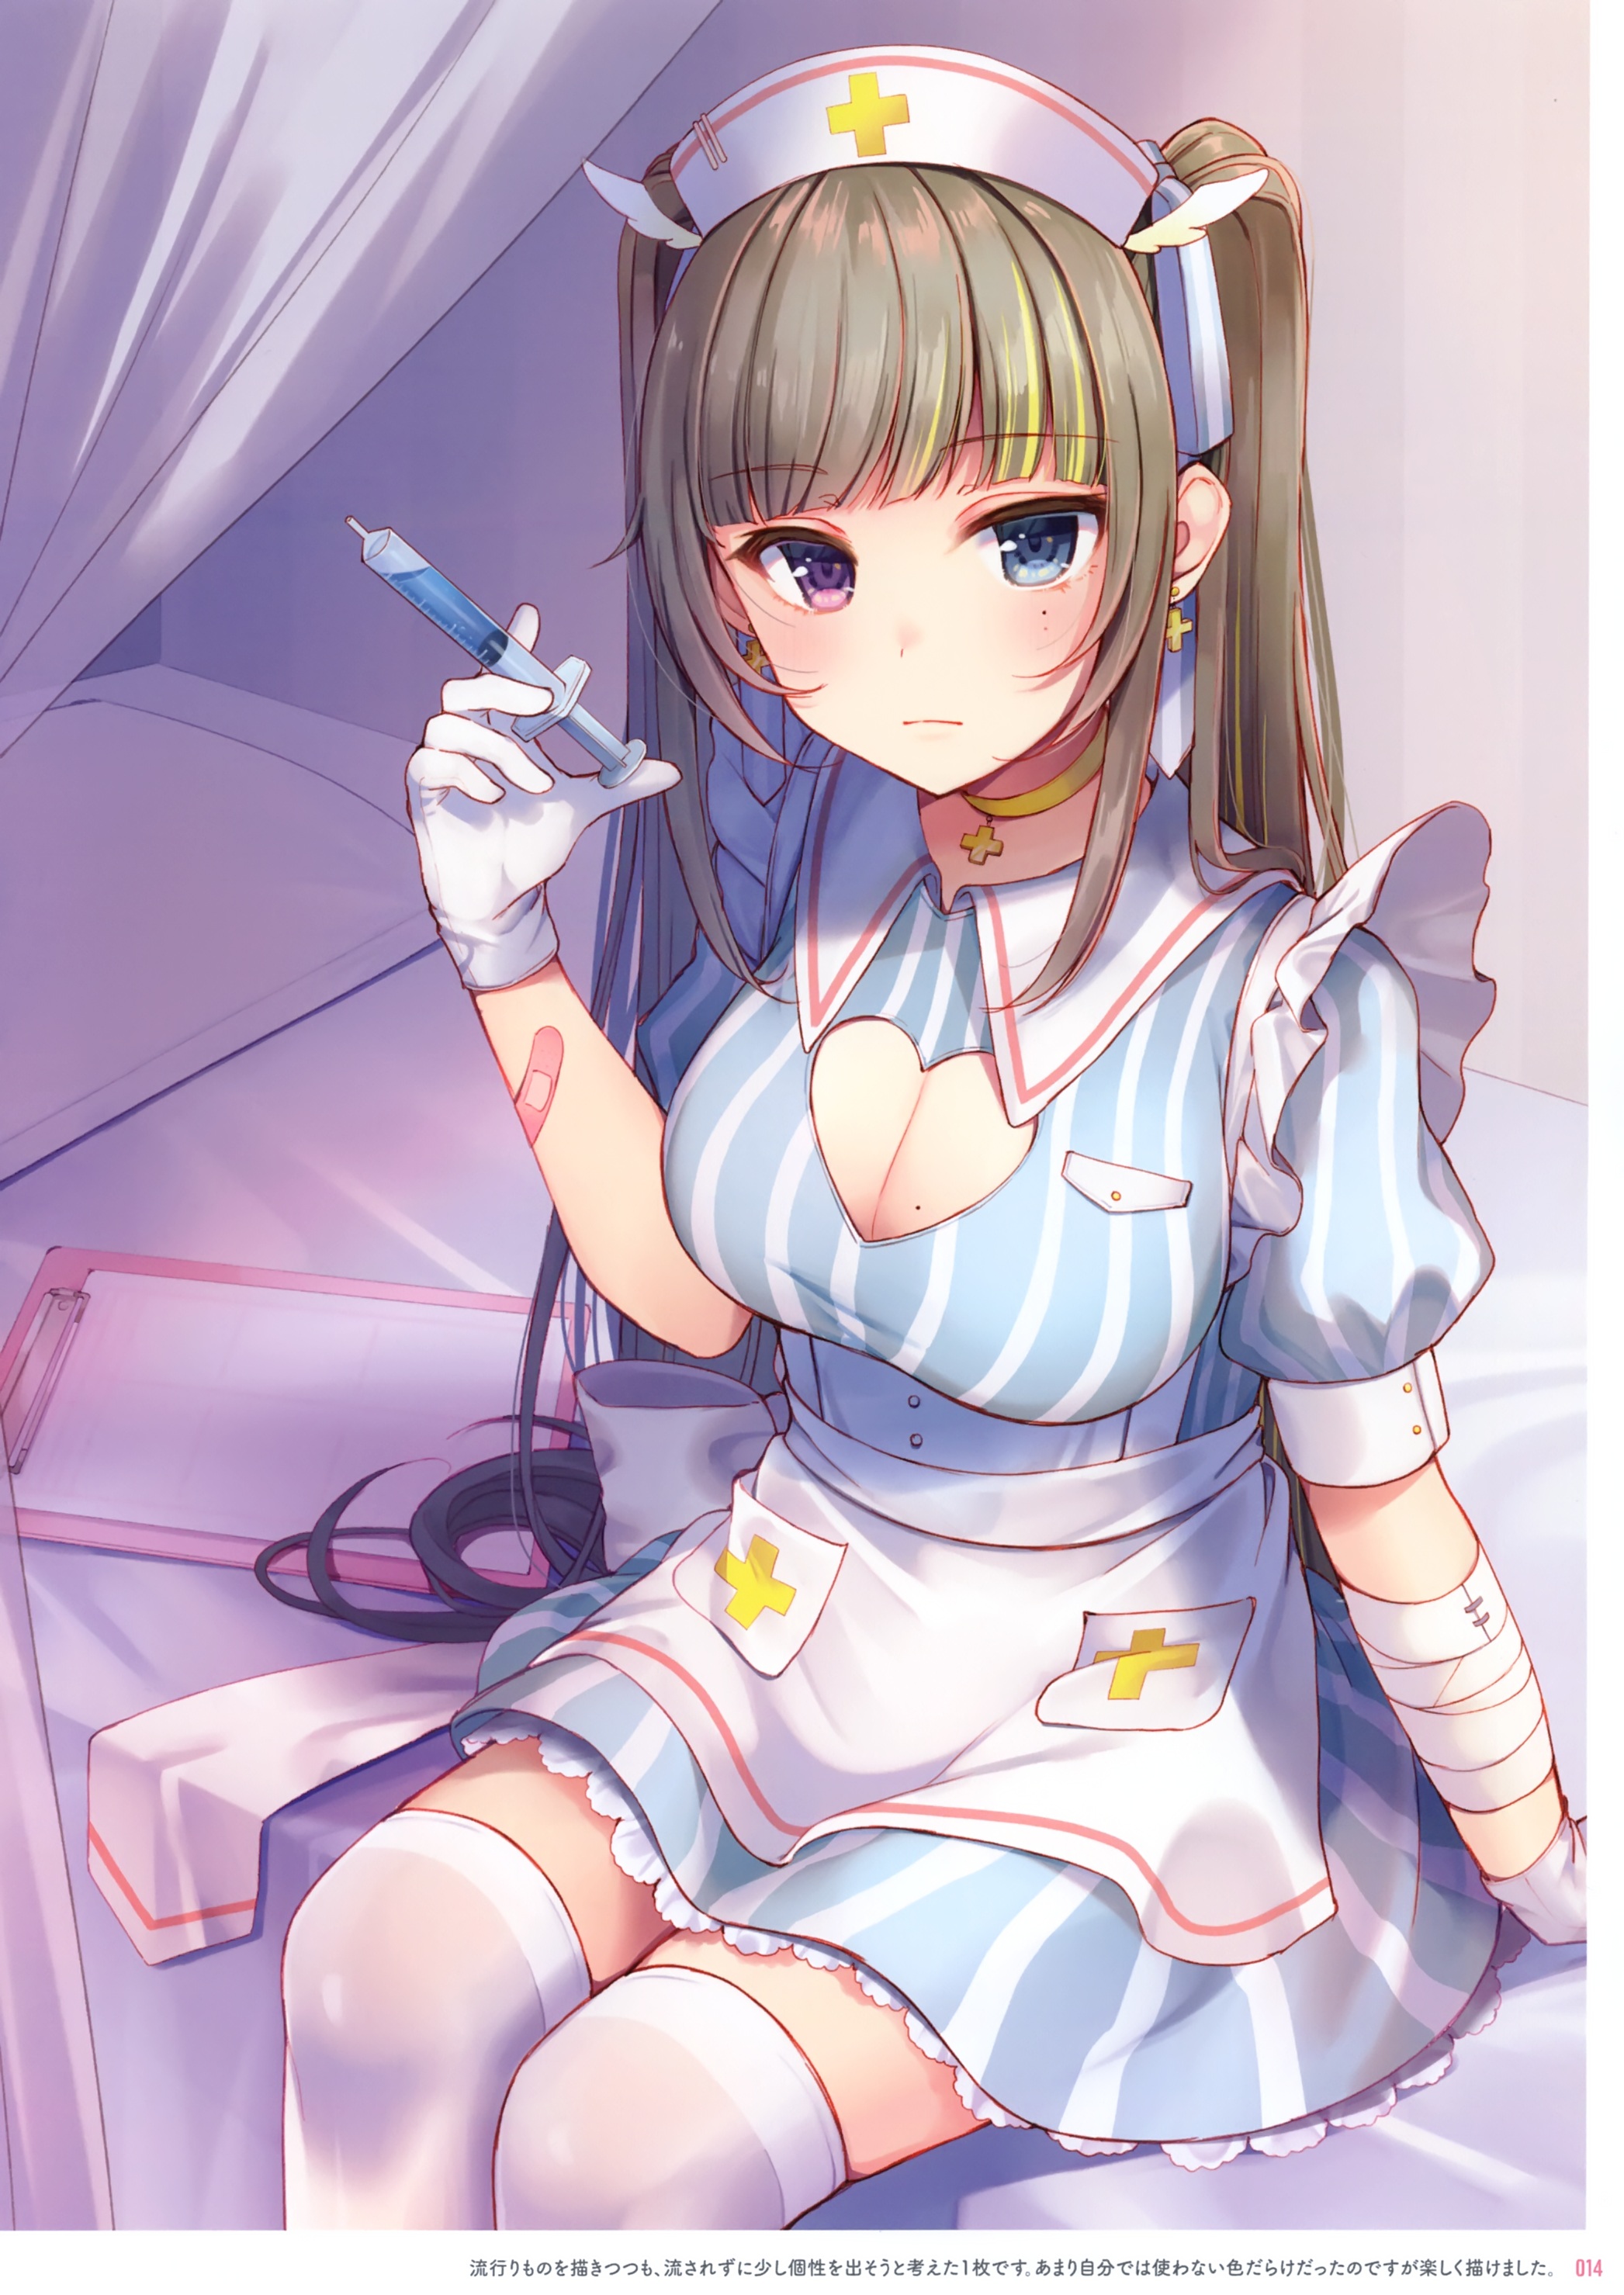 Медсестра арт